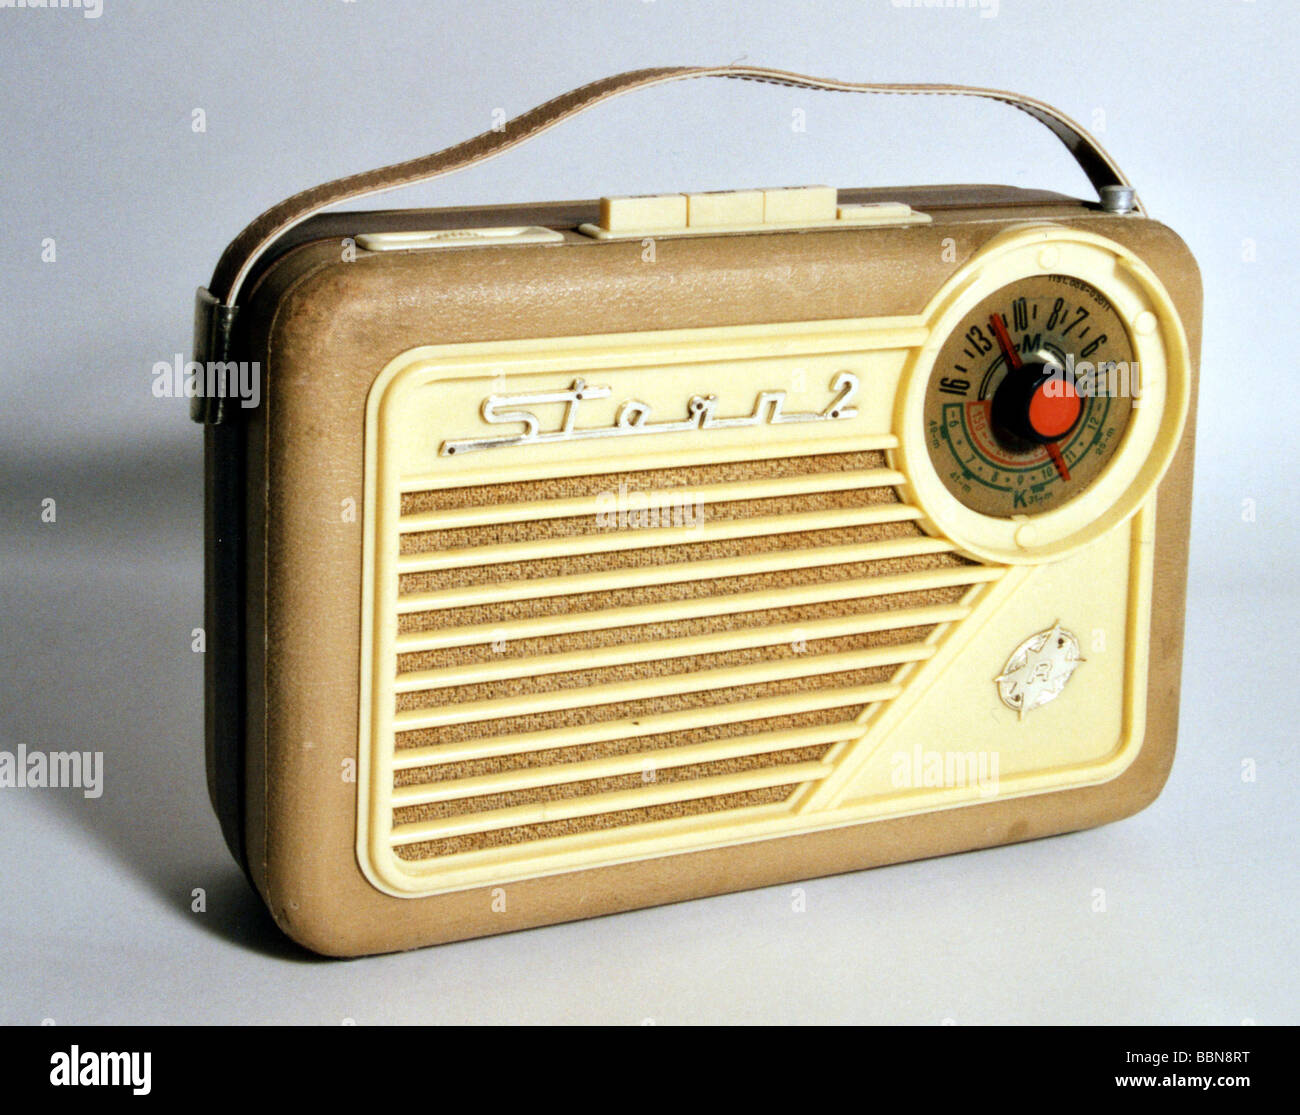 broadcast, radio, radio sets, portable radio Stern 2, made by VEB Stern- Radio Rochlitz, GDR, 1960, historic, historical, 20th century,  East-Germany, East Germany, DDR, radio set, technic, factory design, 1960s,  60s, home electronics